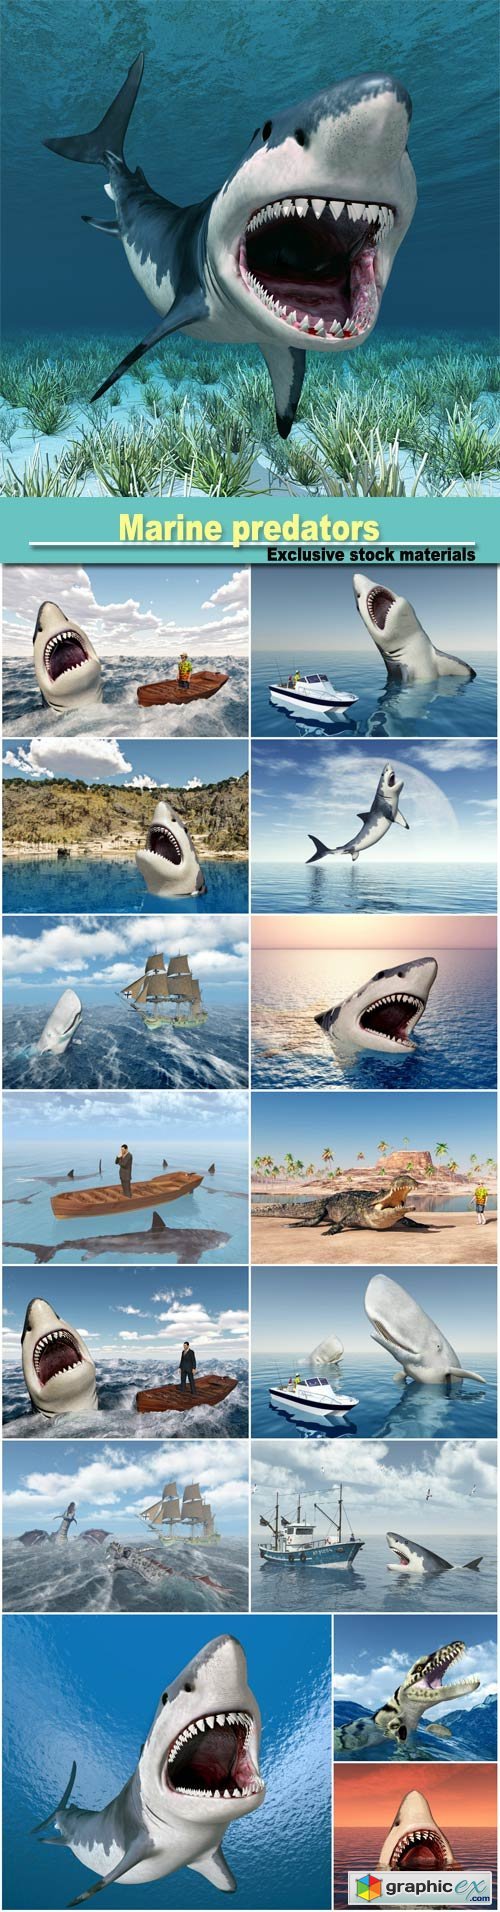 Marine predators, sharks 3D illustration